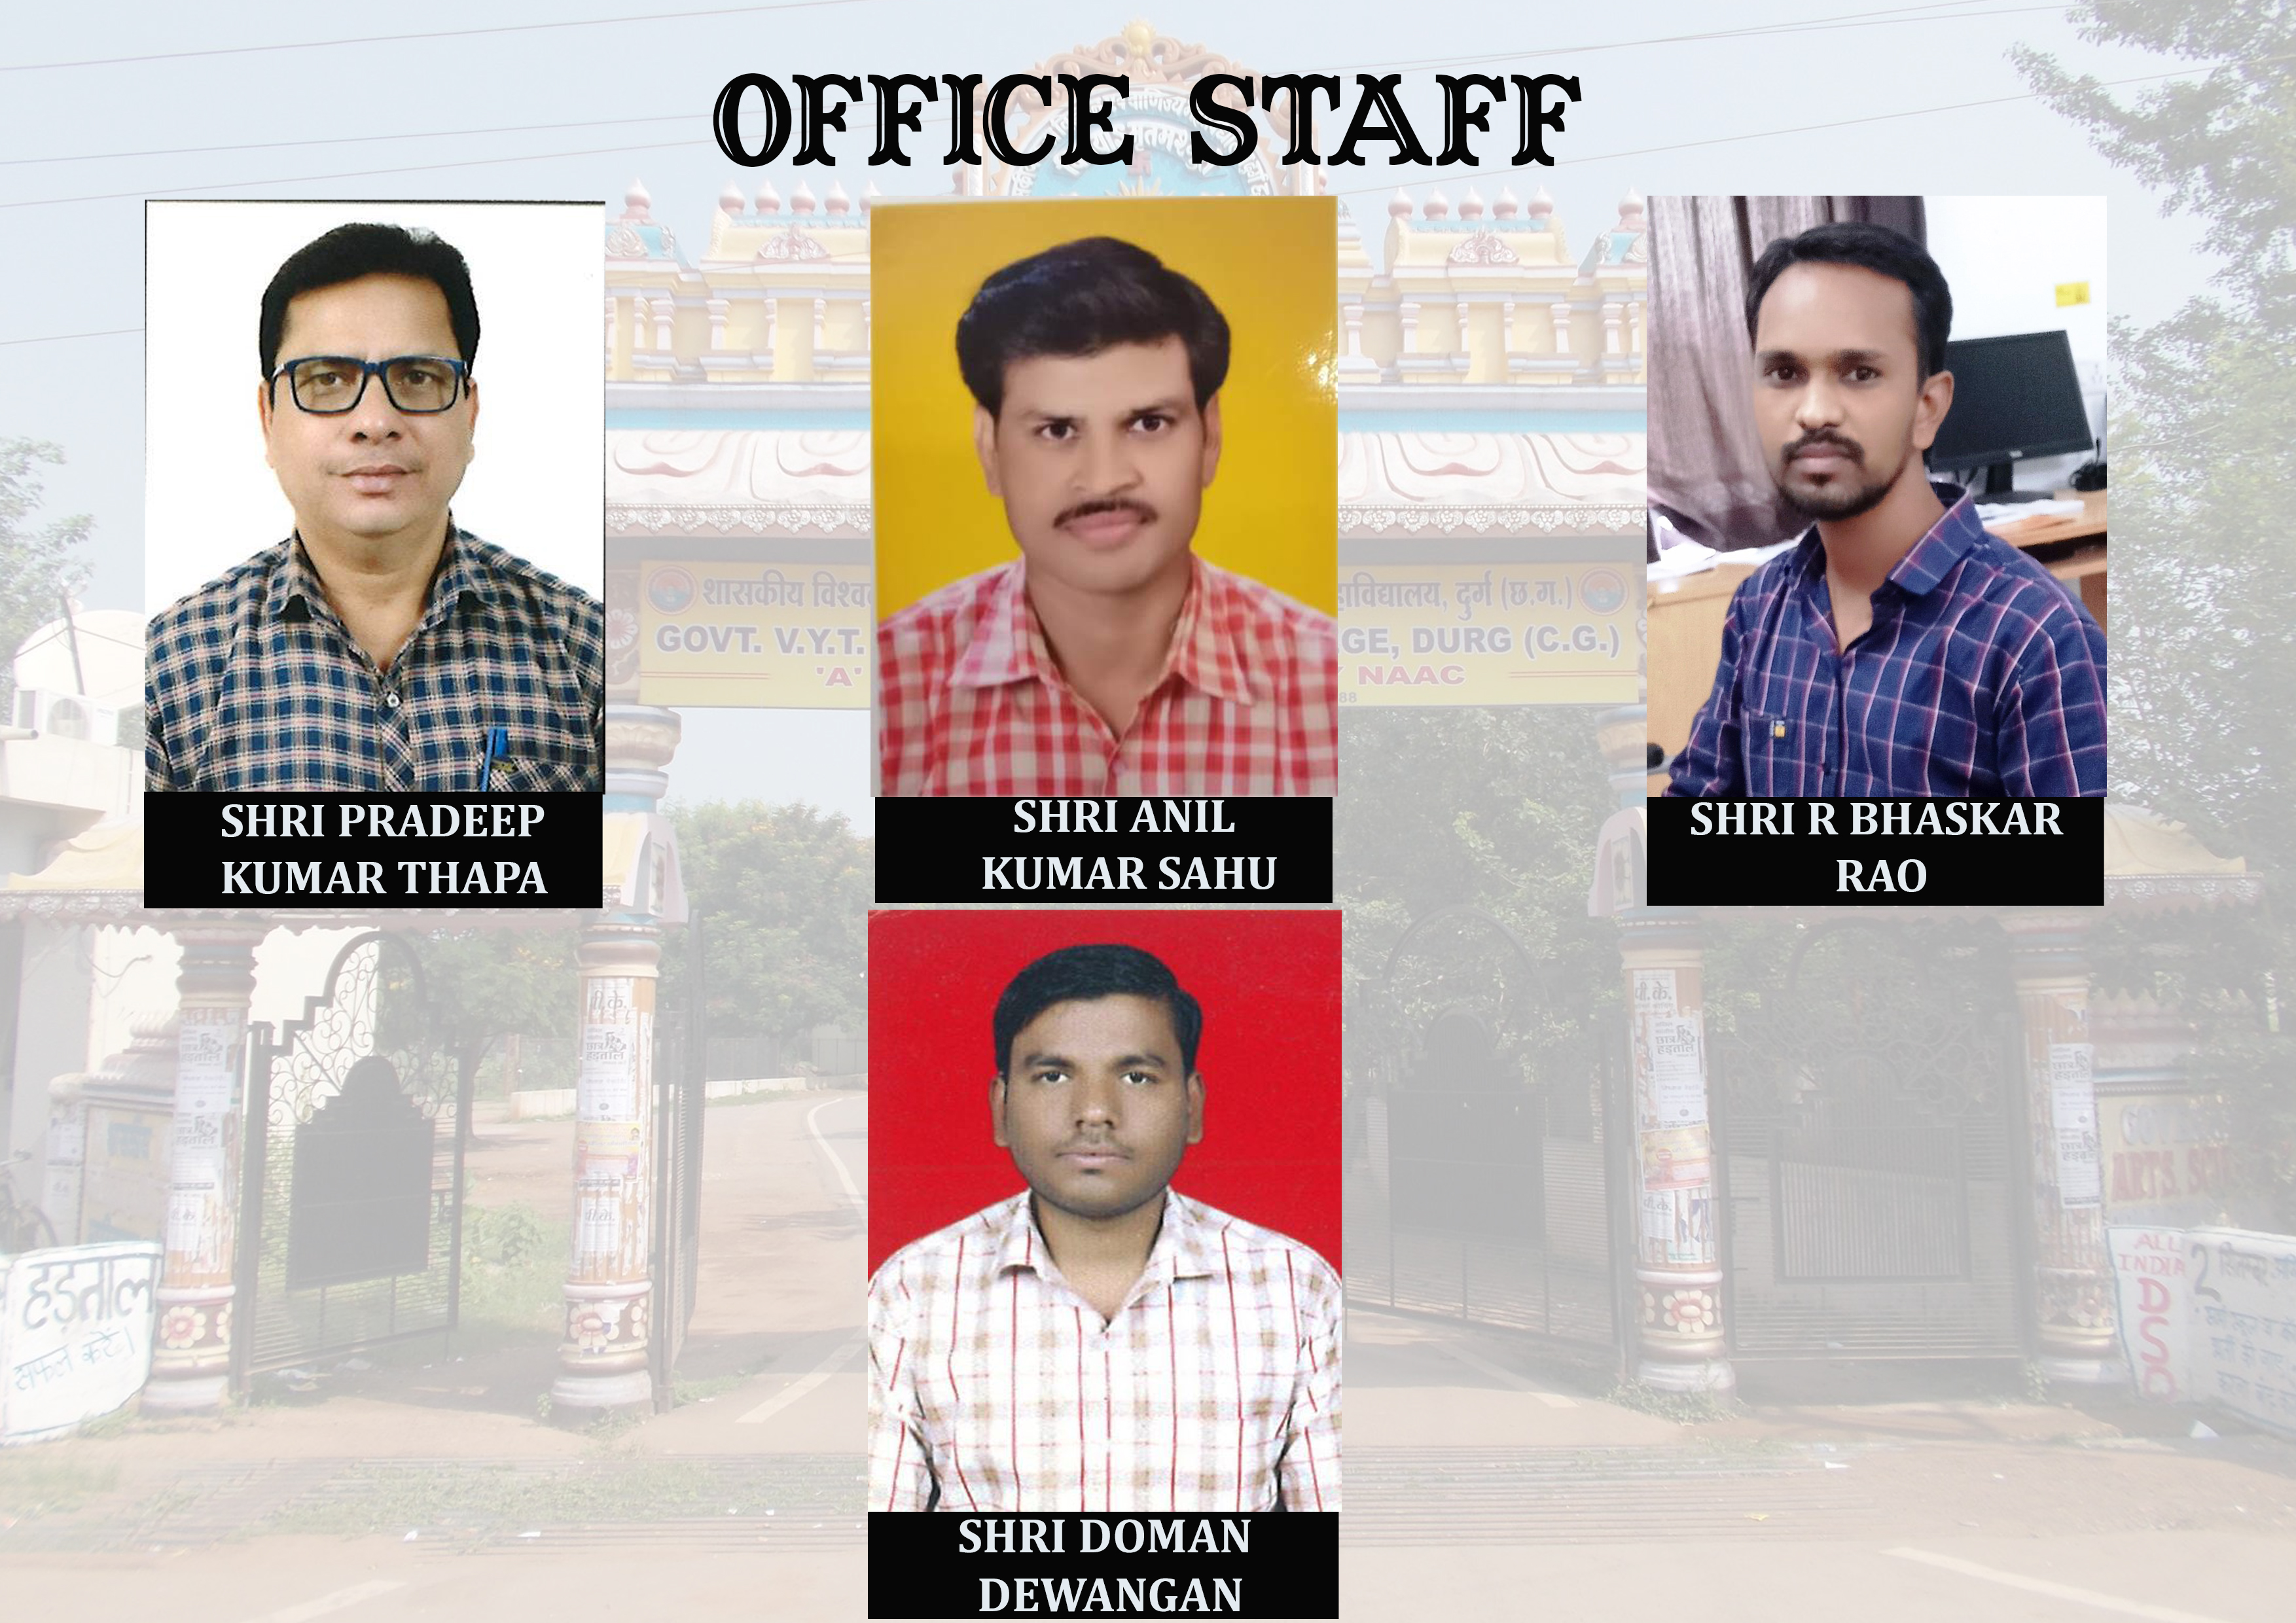 Office Staff